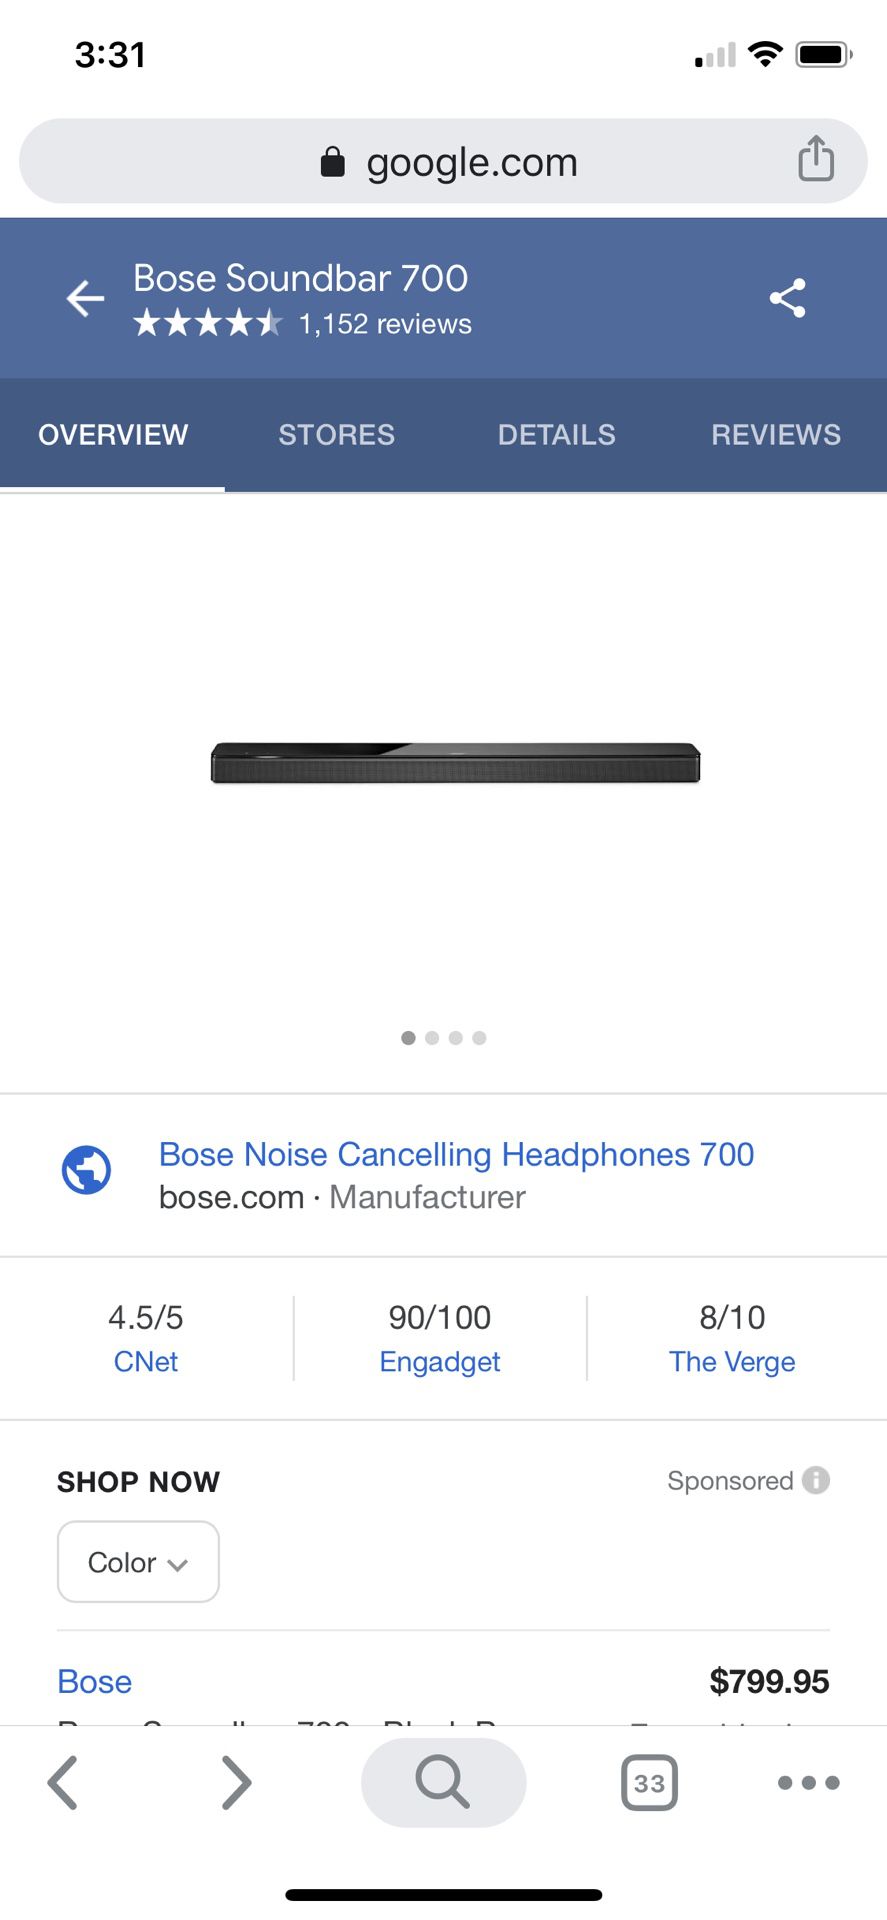 Bose 700 sound bar used